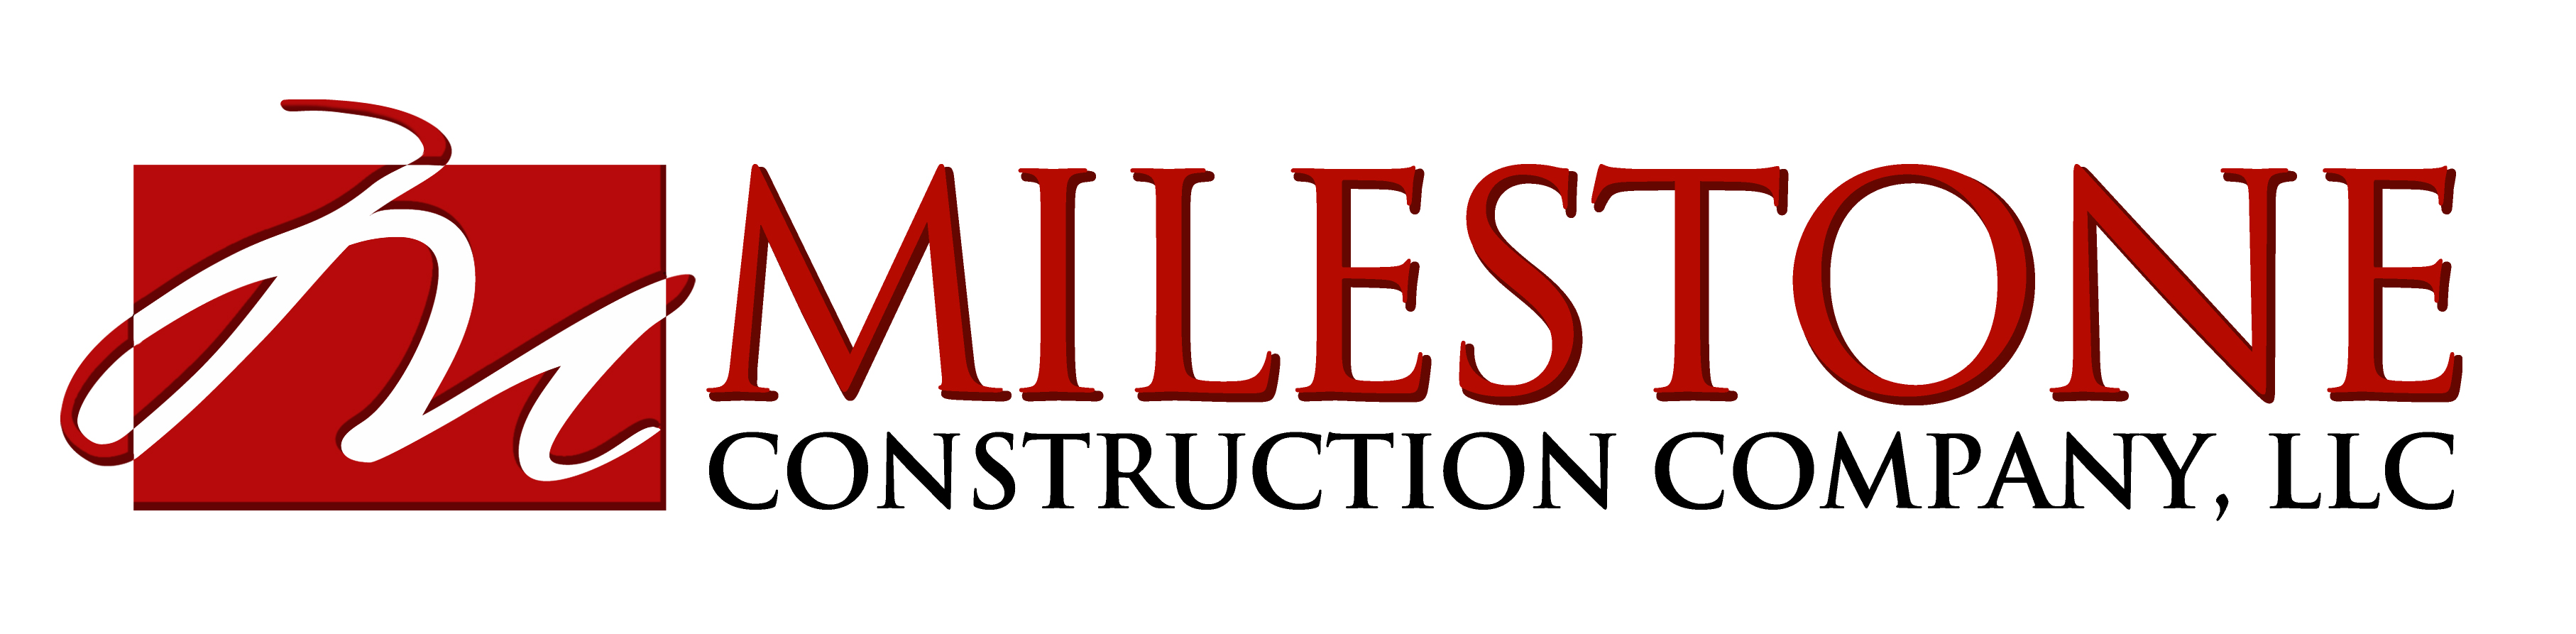 Milestone Construction Company, LLC